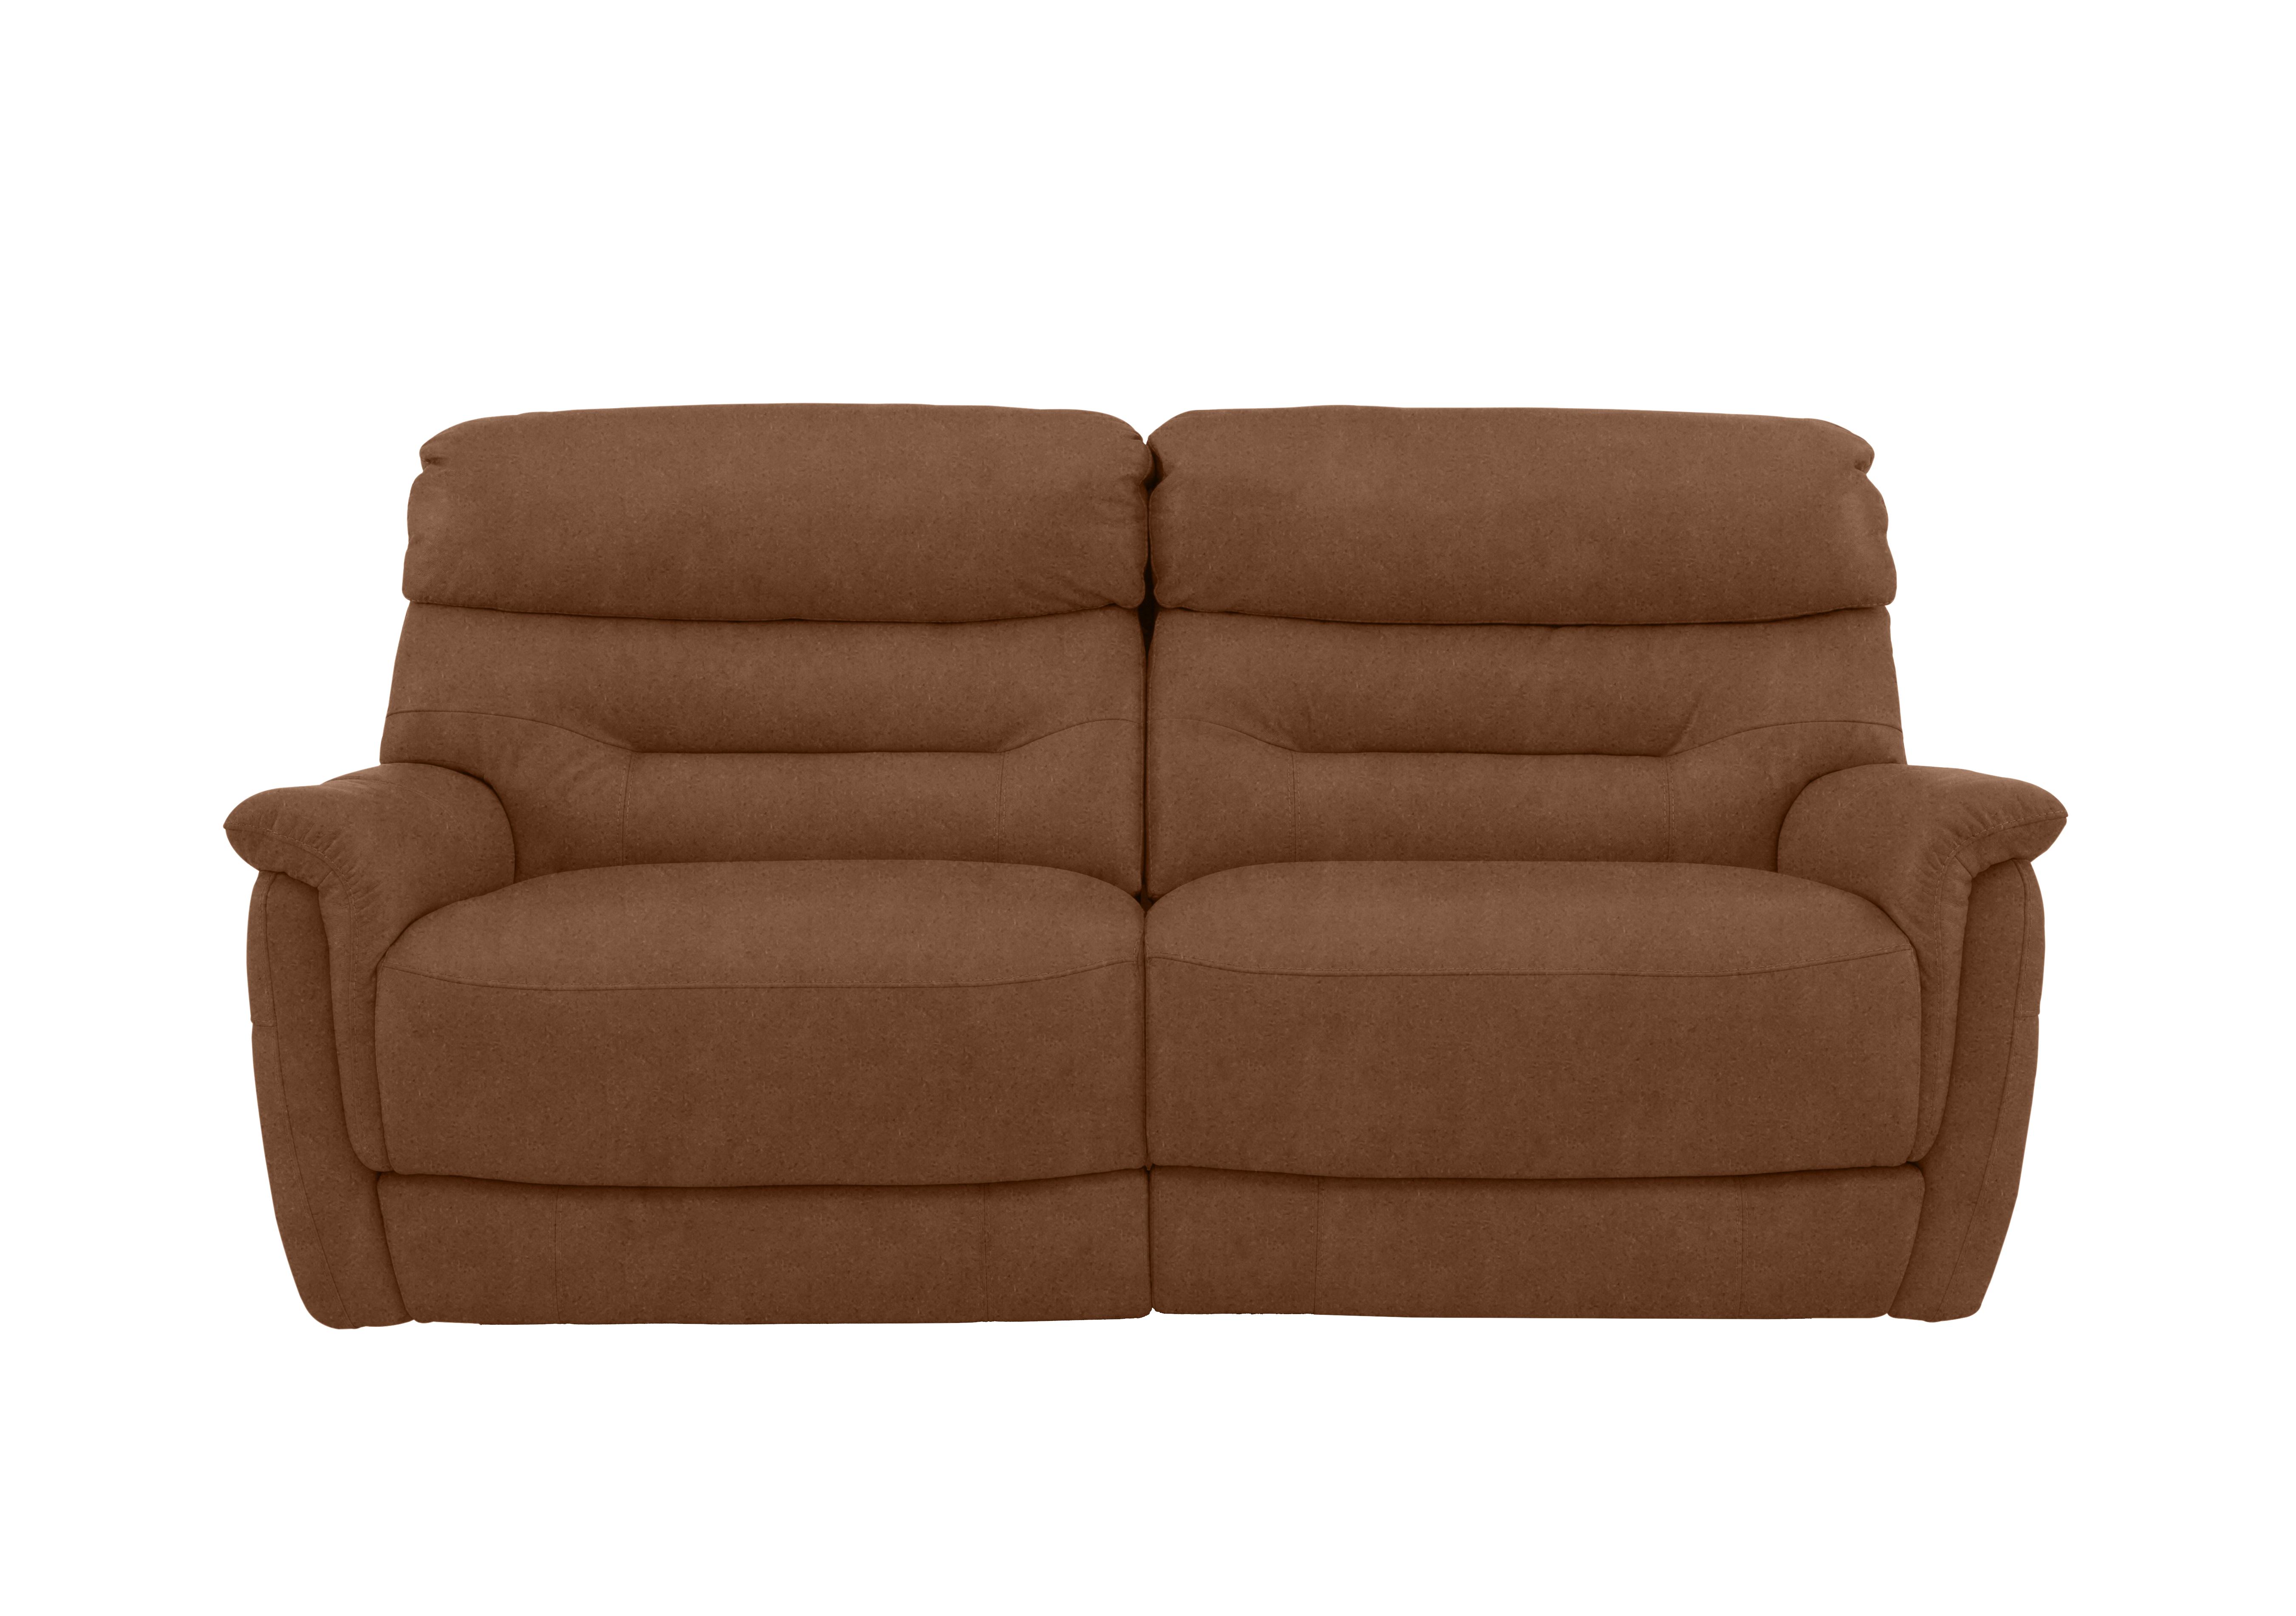 Chicago 3 Seater Fabric Sofa in Bfa-Blj-R05 Hazelnut on Furniture Village